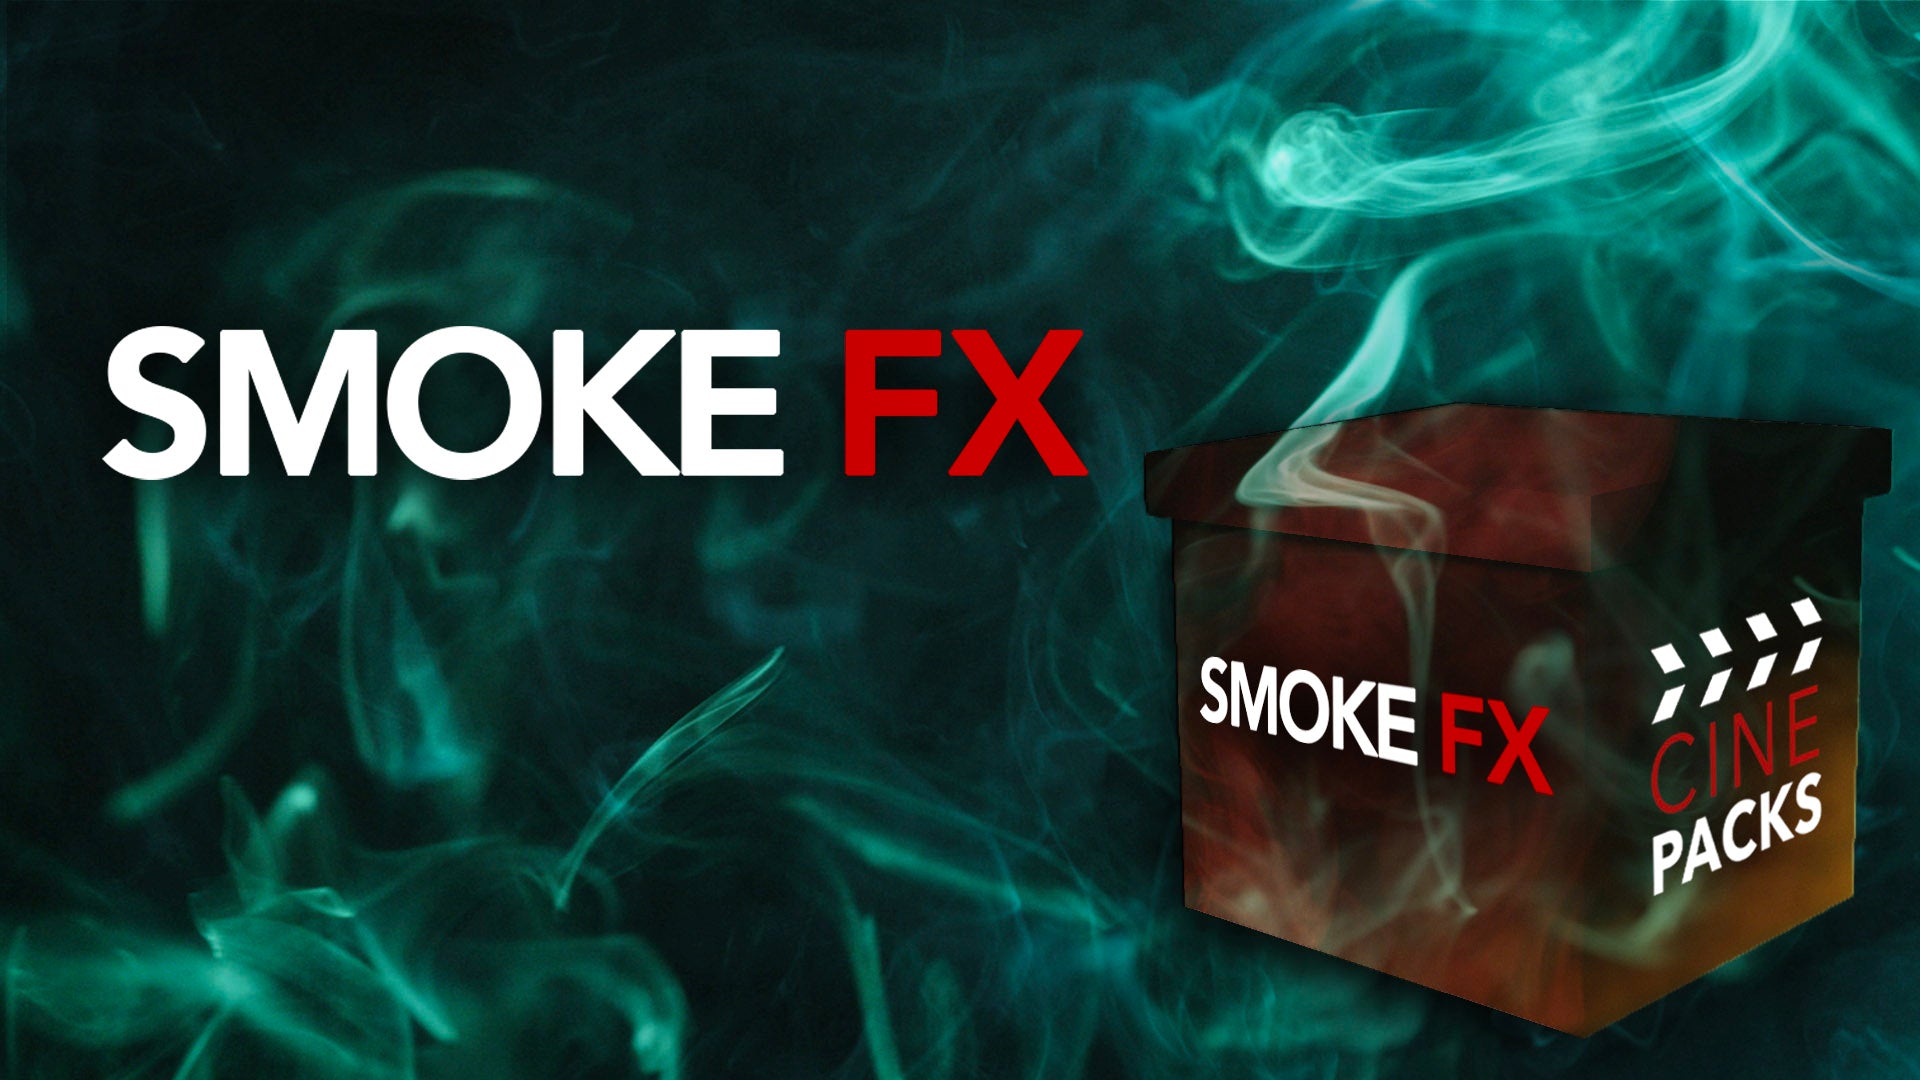 Smoke FX - CinePacks